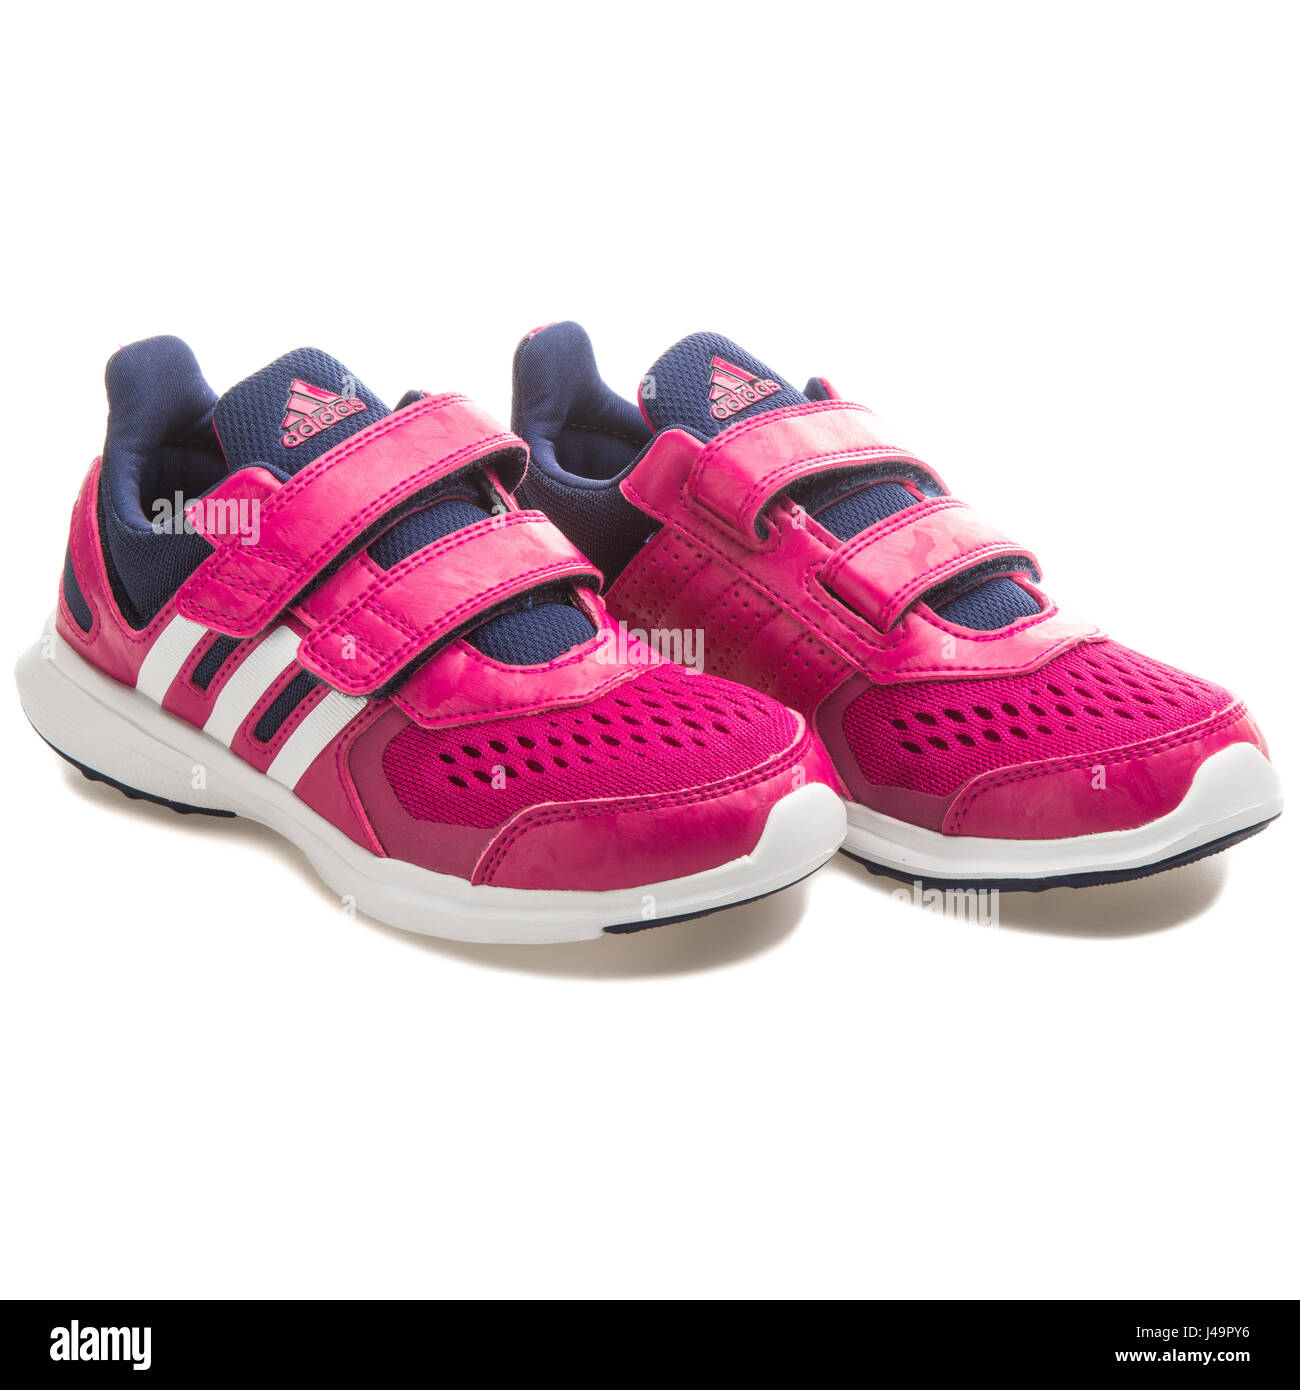 Adidas Hyperfast 2.0 cf k Pink - S83004 Stock Photo - Alamy